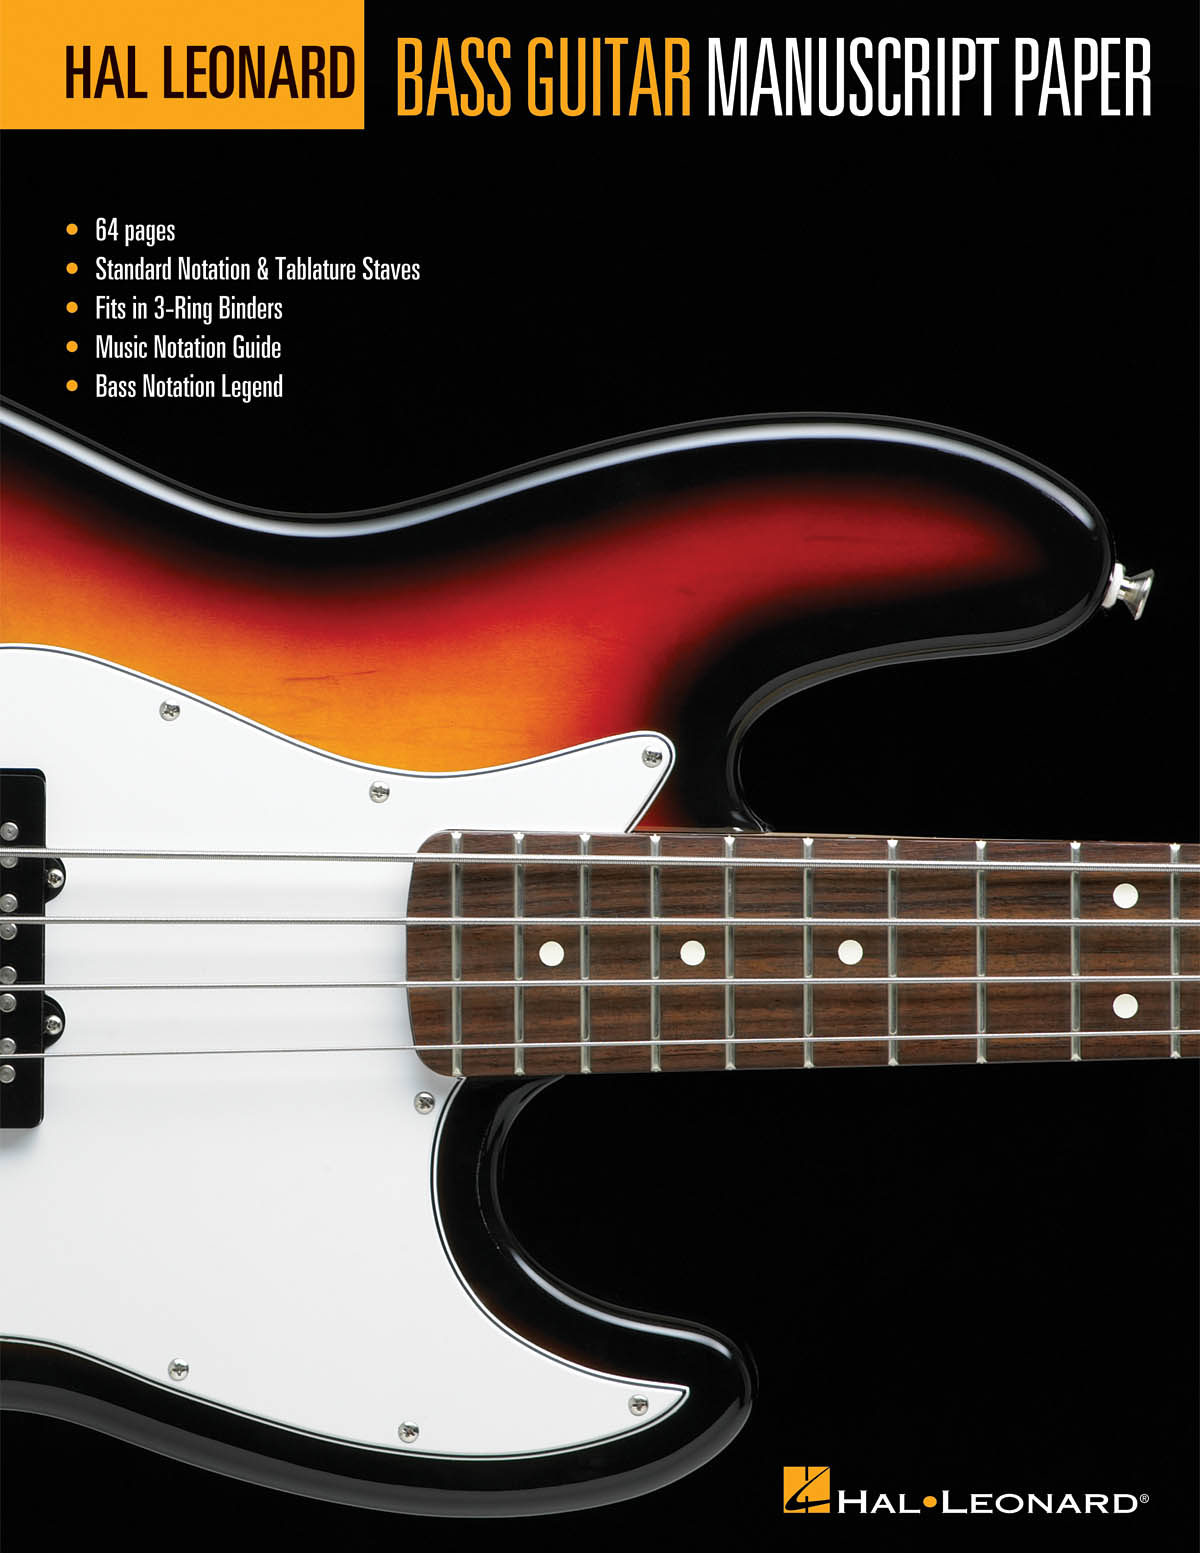 Hal Leonard Bass Guitar Manuscript Paper: Manuscript Paper: Manuscript